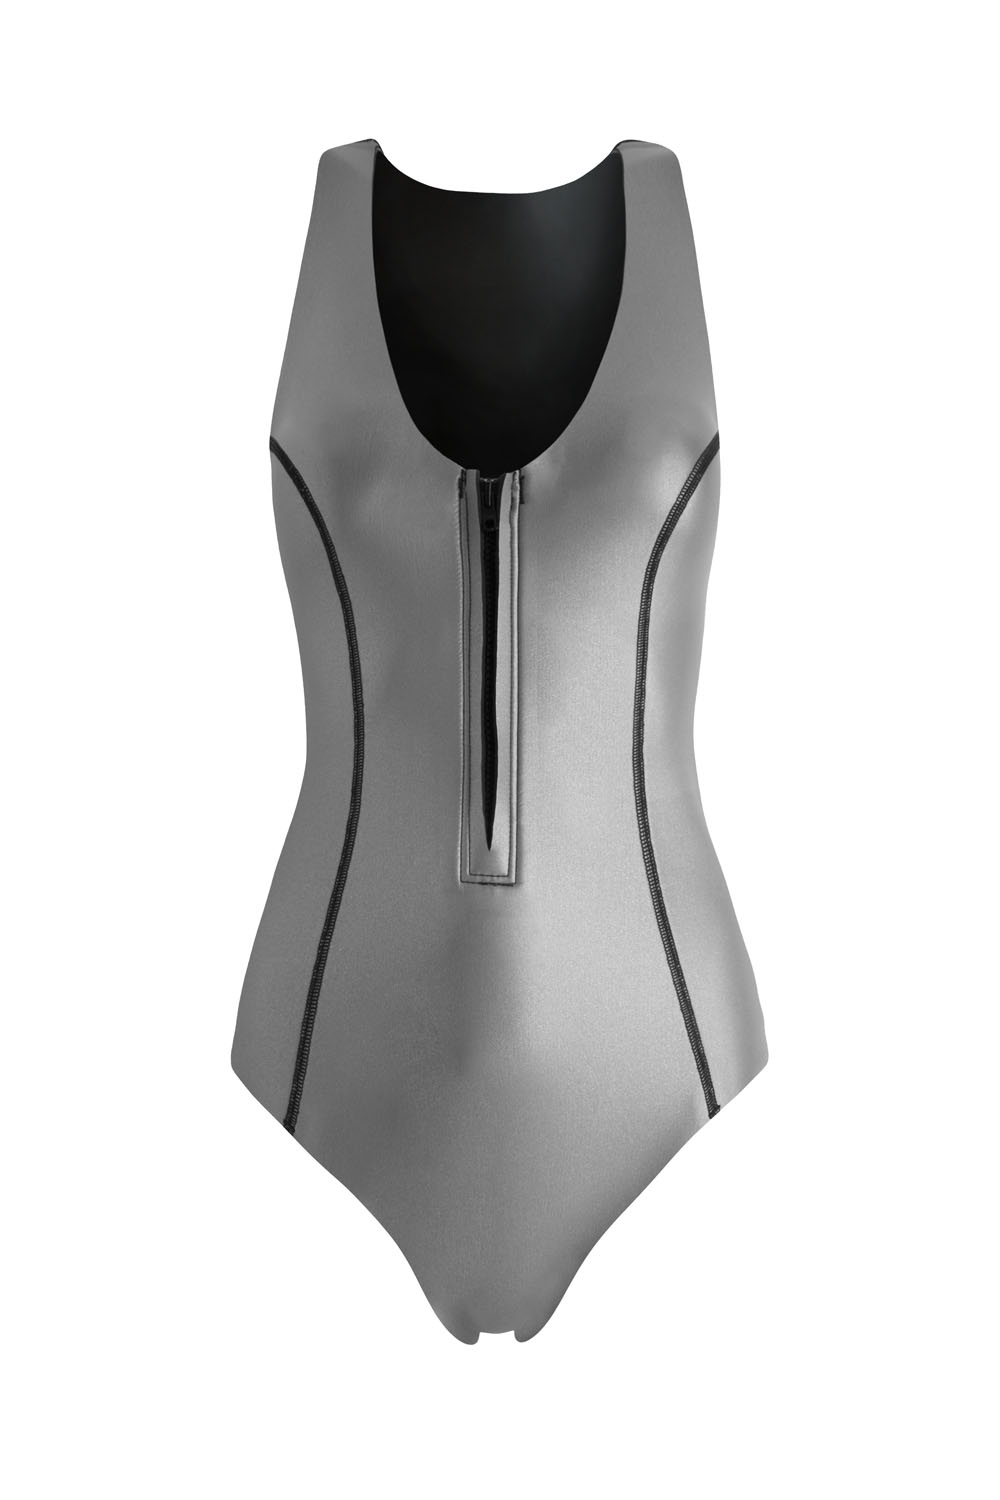 Neoprene wetsuit, petroleum-free surf ecoprene. Sylvia in silver, by NOW_THEN, sustainable swimwear.